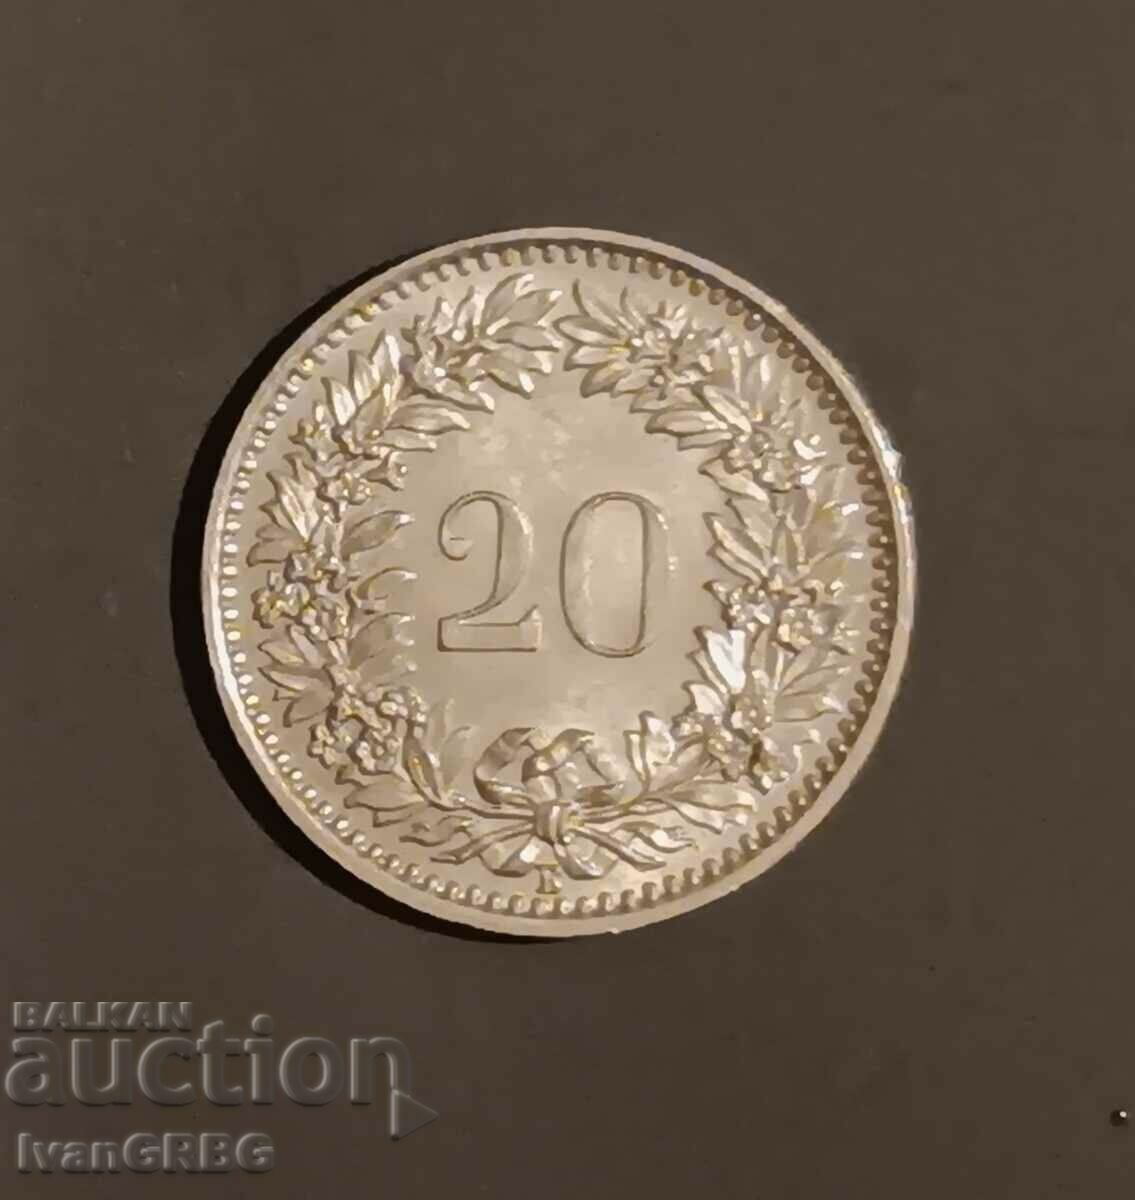 20 rapen 1964 Switzerland, 20 centimes 1964 Switzerland